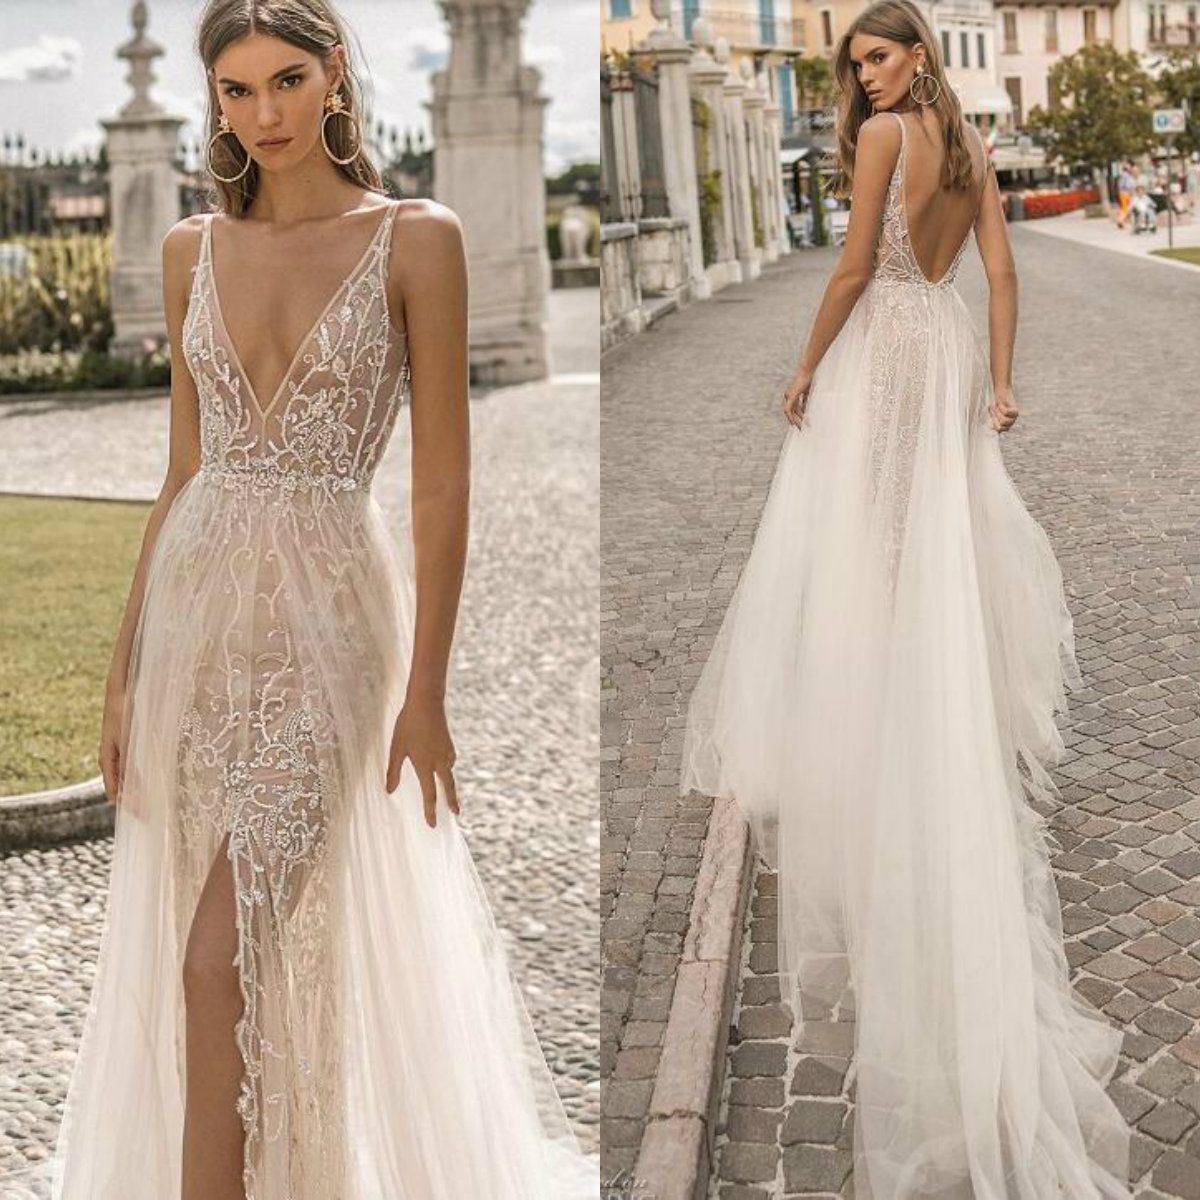 2019 beach wedding dresses